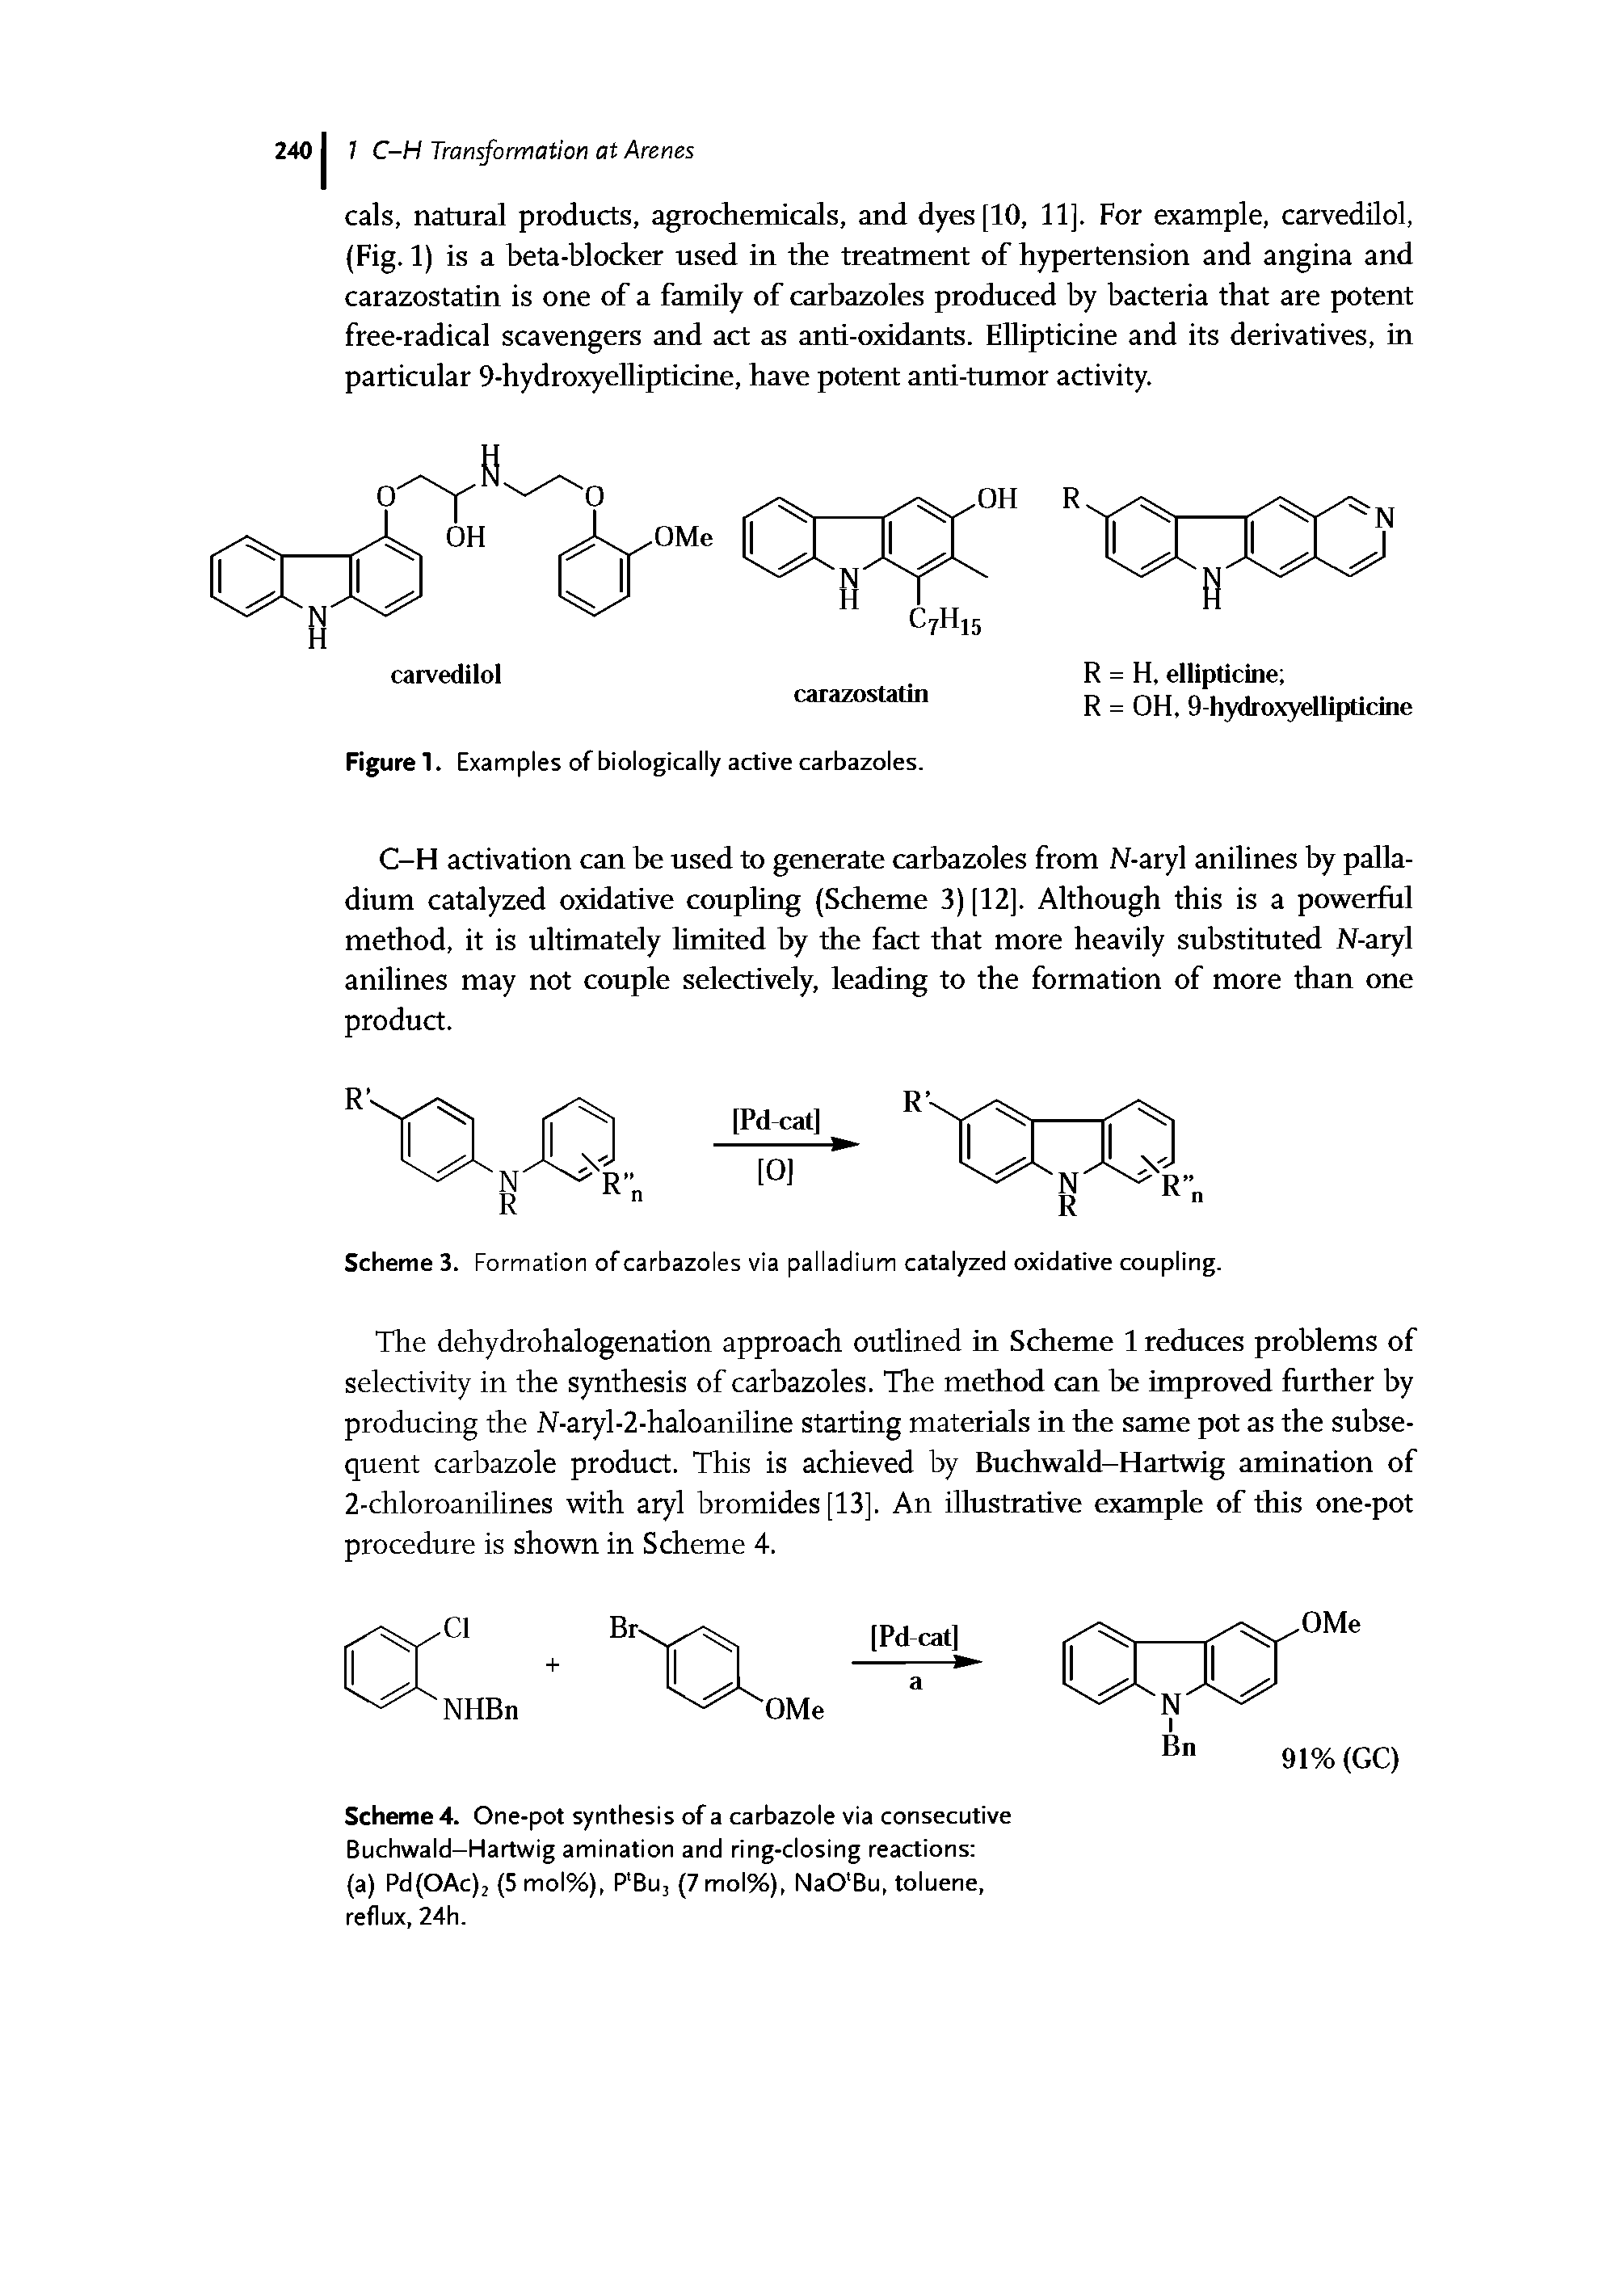 Scheme 3. Formation of carbazoles via palladium catalyzed oxidative coupling.